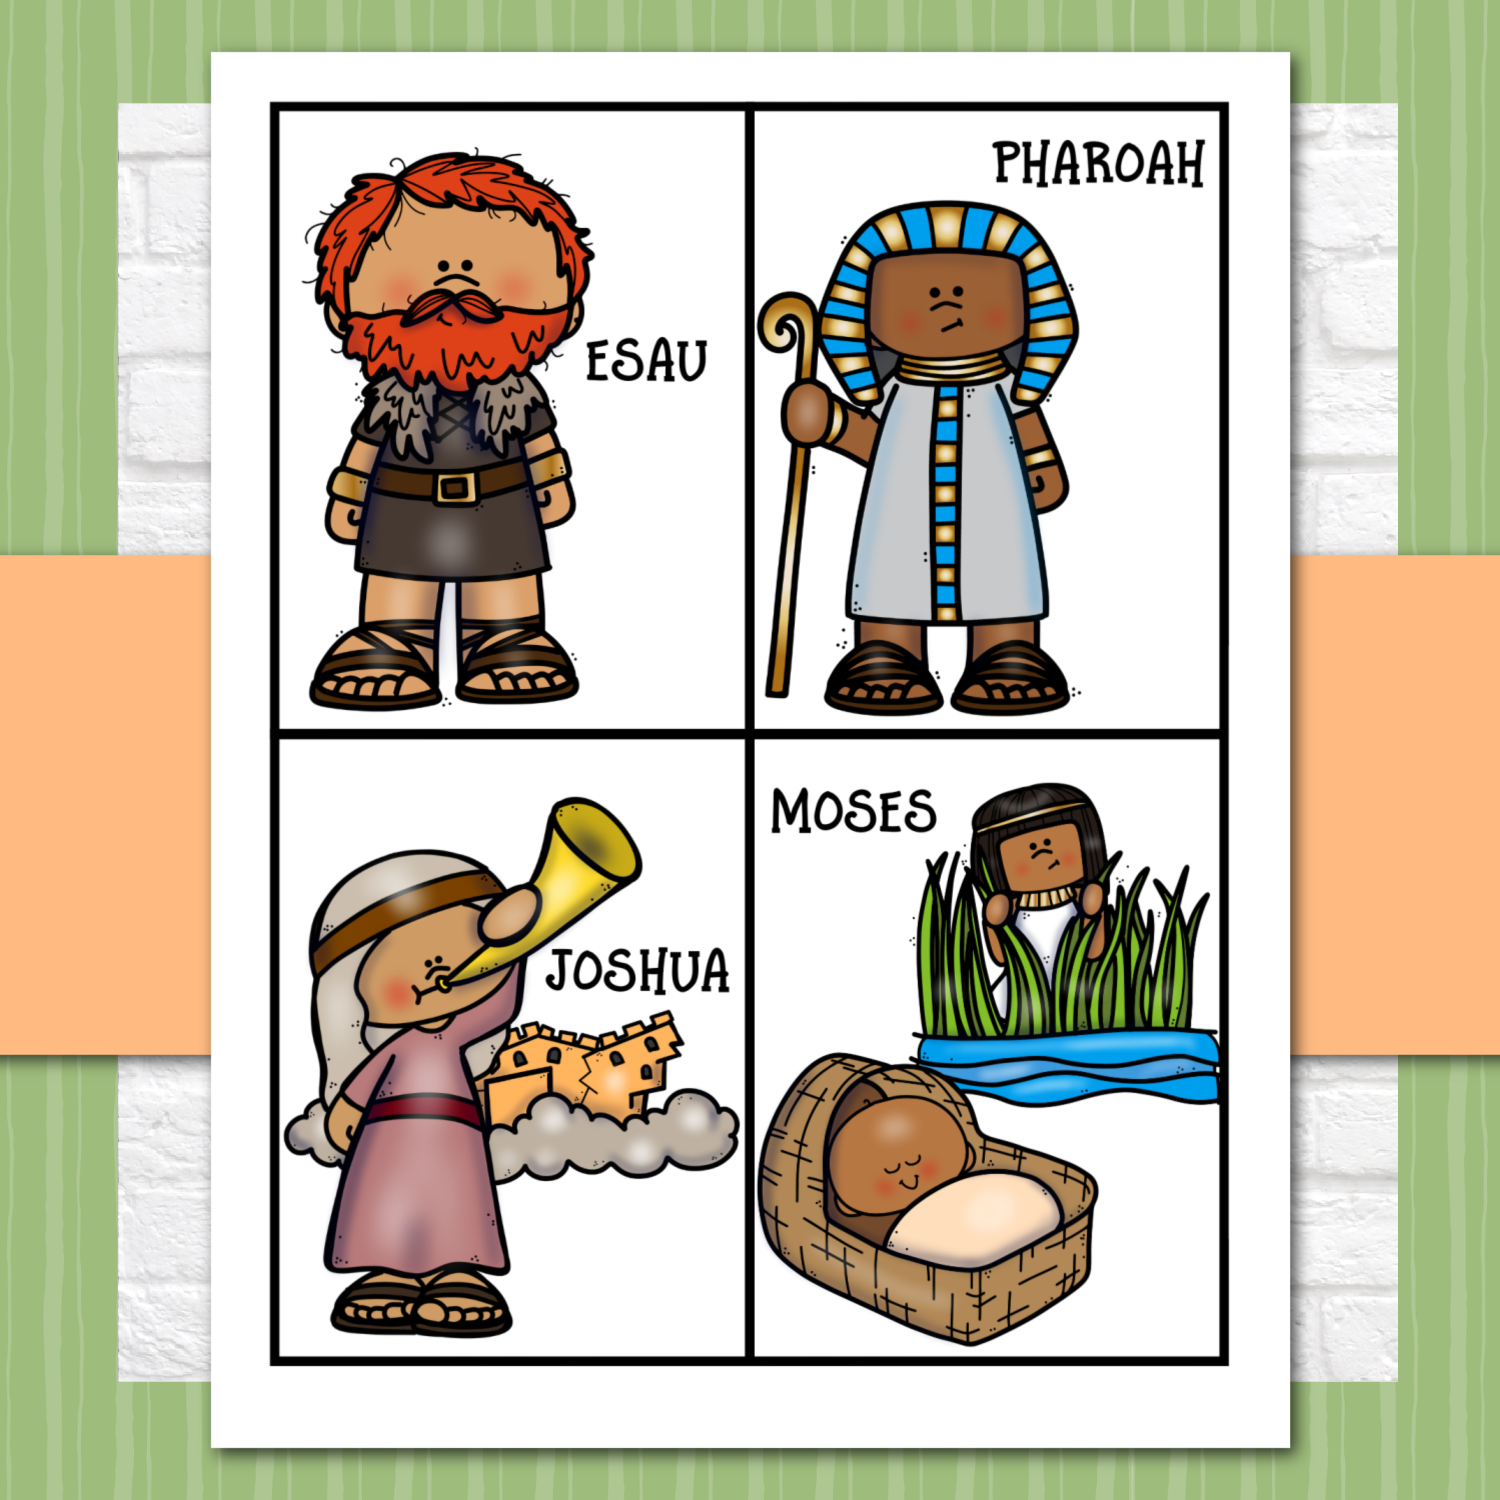 Bible Bingo - Old Testament CHARACTERS Bible Games for Kids